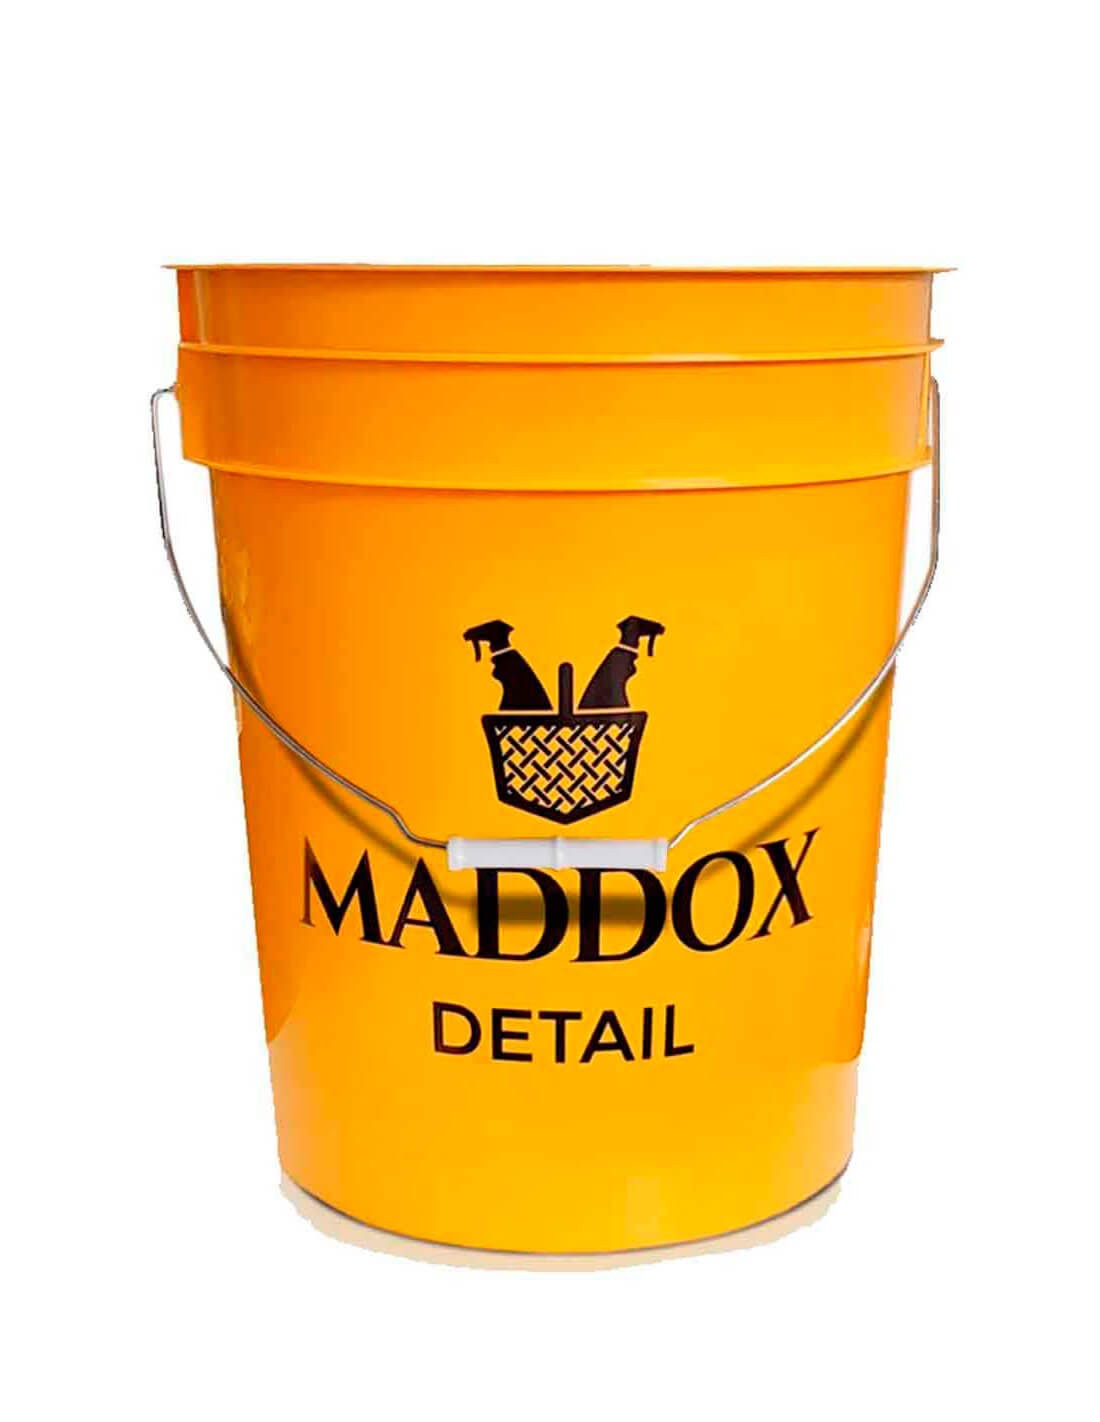 MADDOX DETAIL- PREMIUM POLISH-Reparador alto rendimiento para